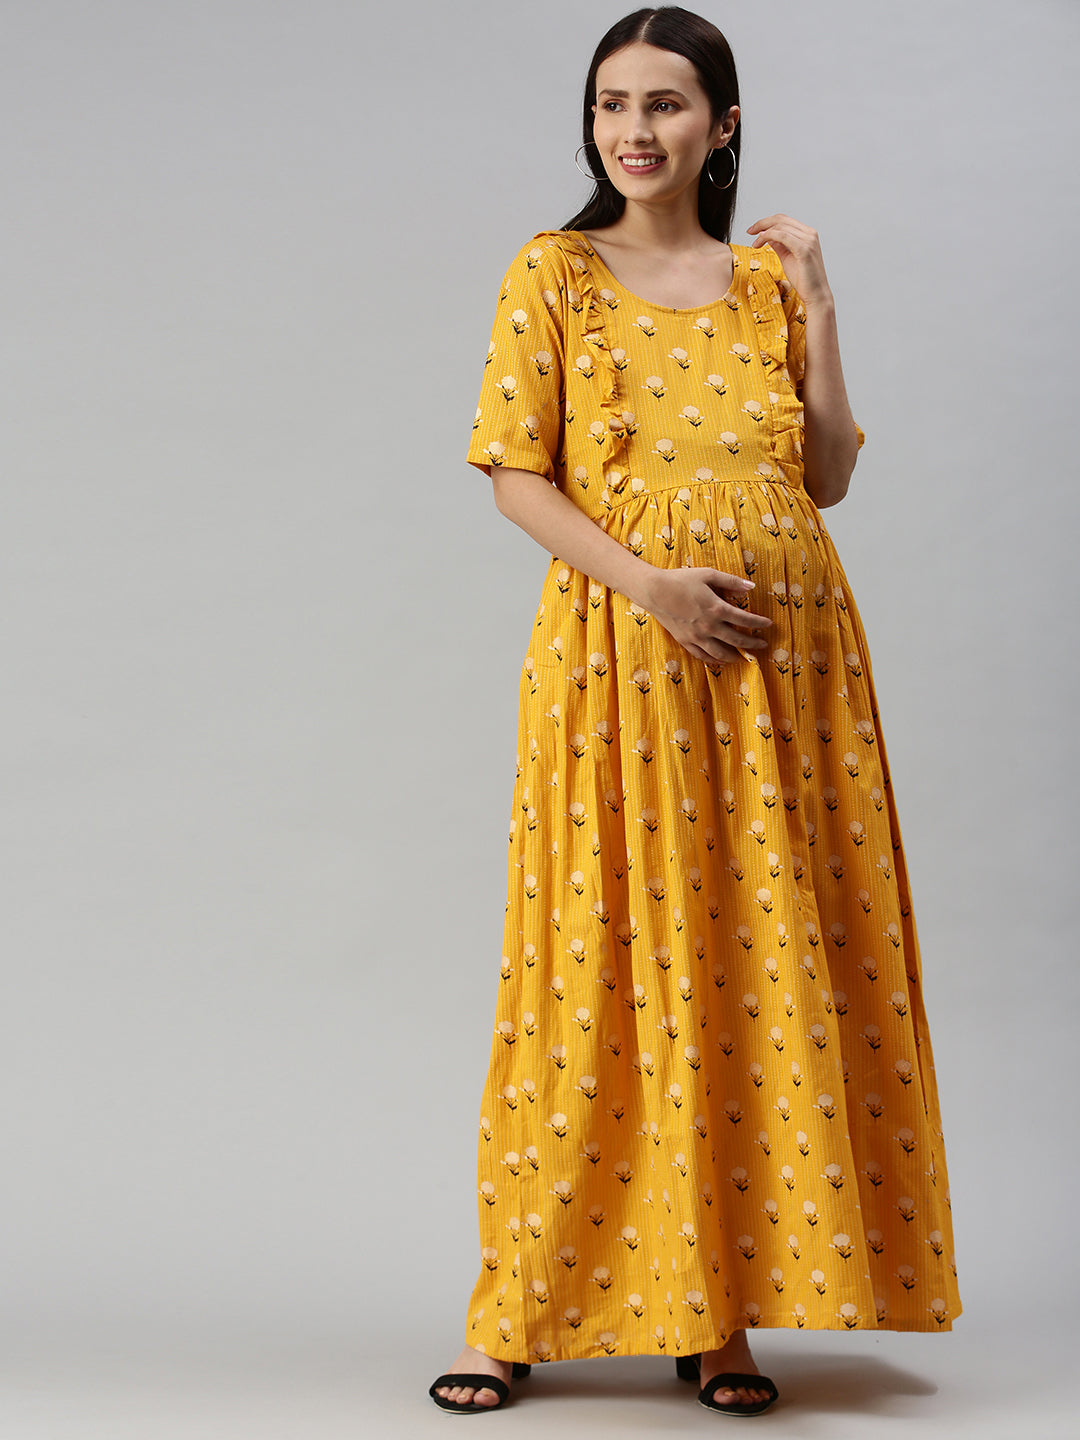 Mustard Yellow Floral Maternity Maxi Dress